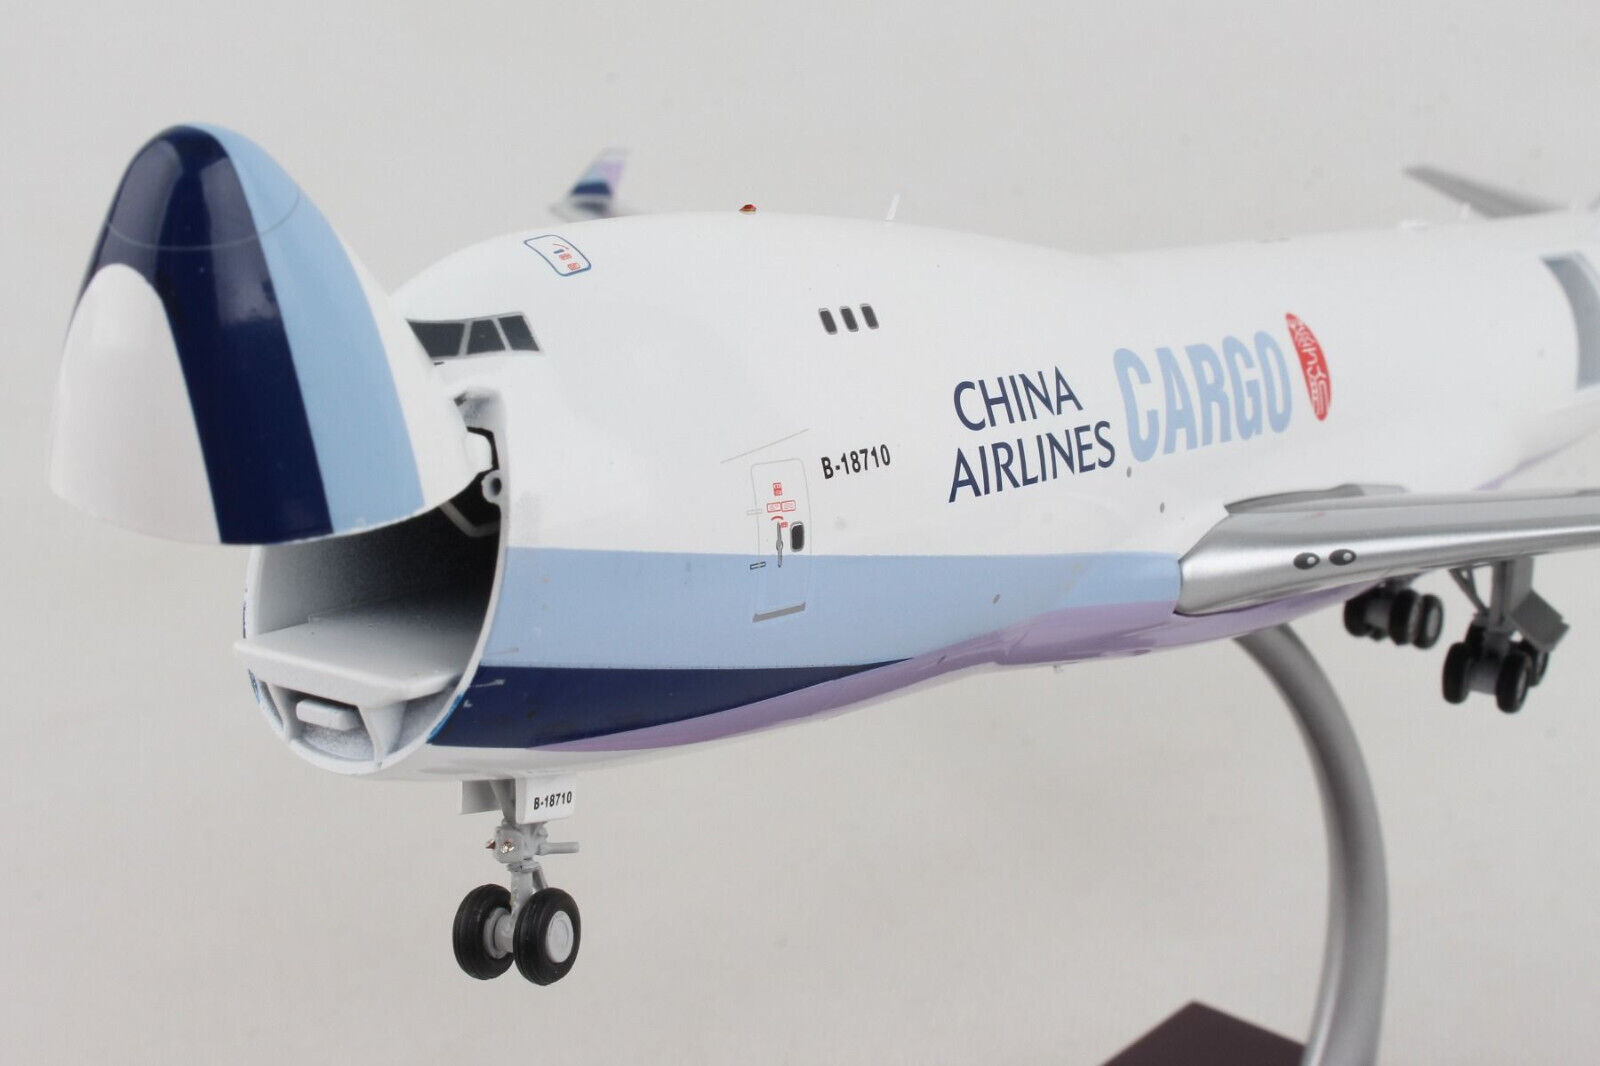 Gemini200 China Airlines Cargo Boeing 747-400F Interactive